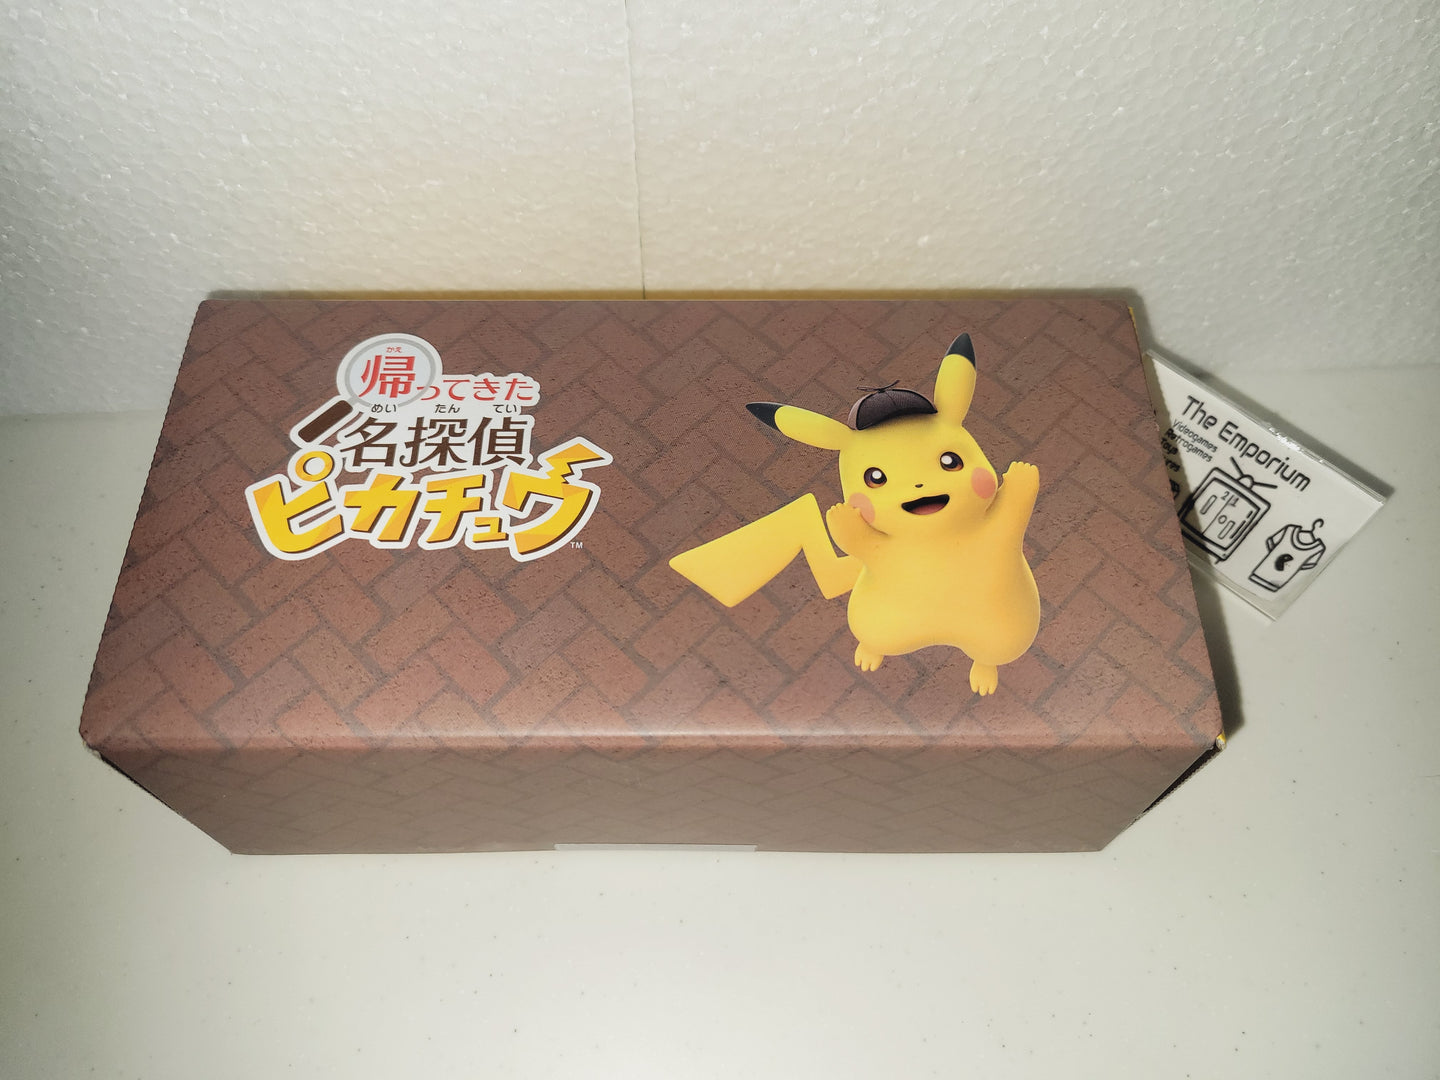 Detective Pikachu Returns with Preorder Bonus - Nintendo Switch NSW